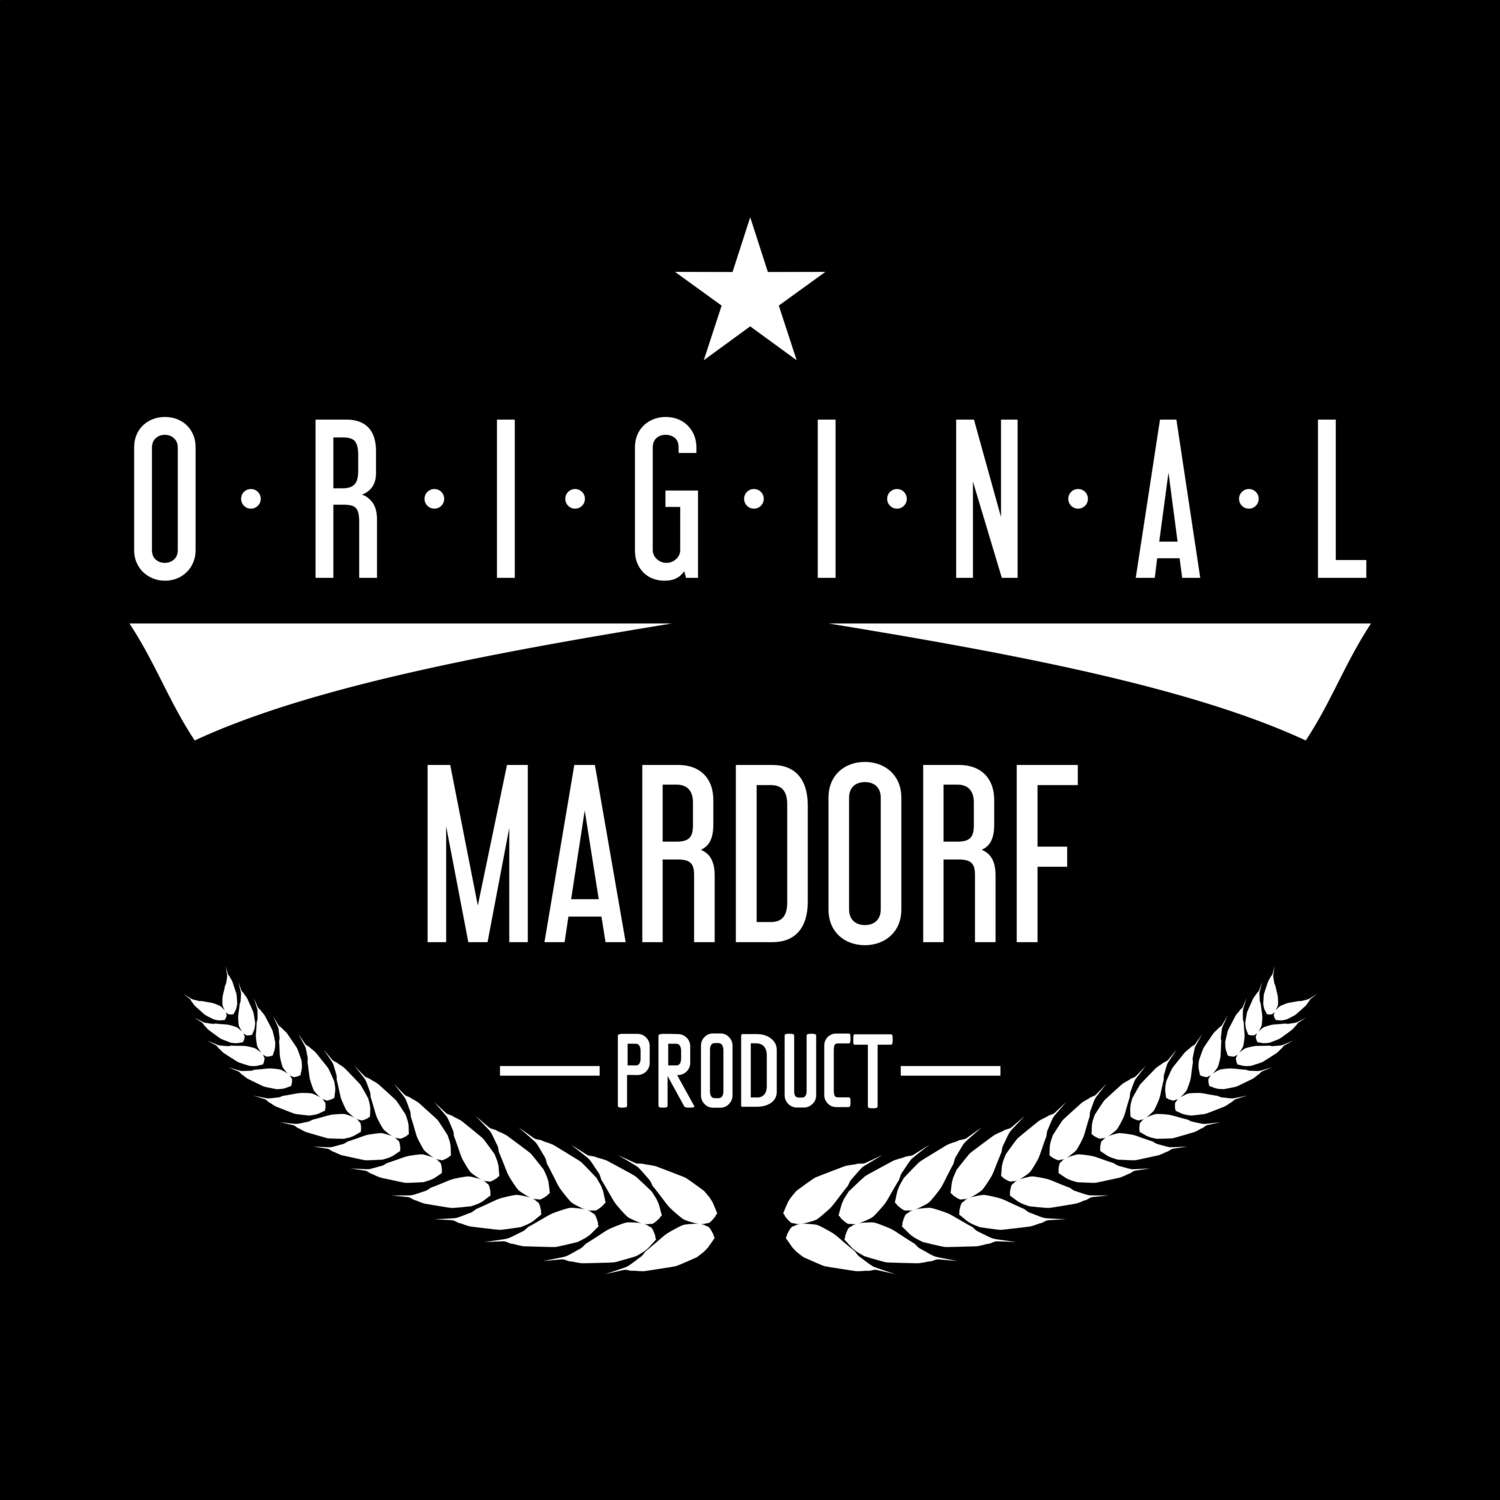 Mardorf T-Shirt »Original Product«